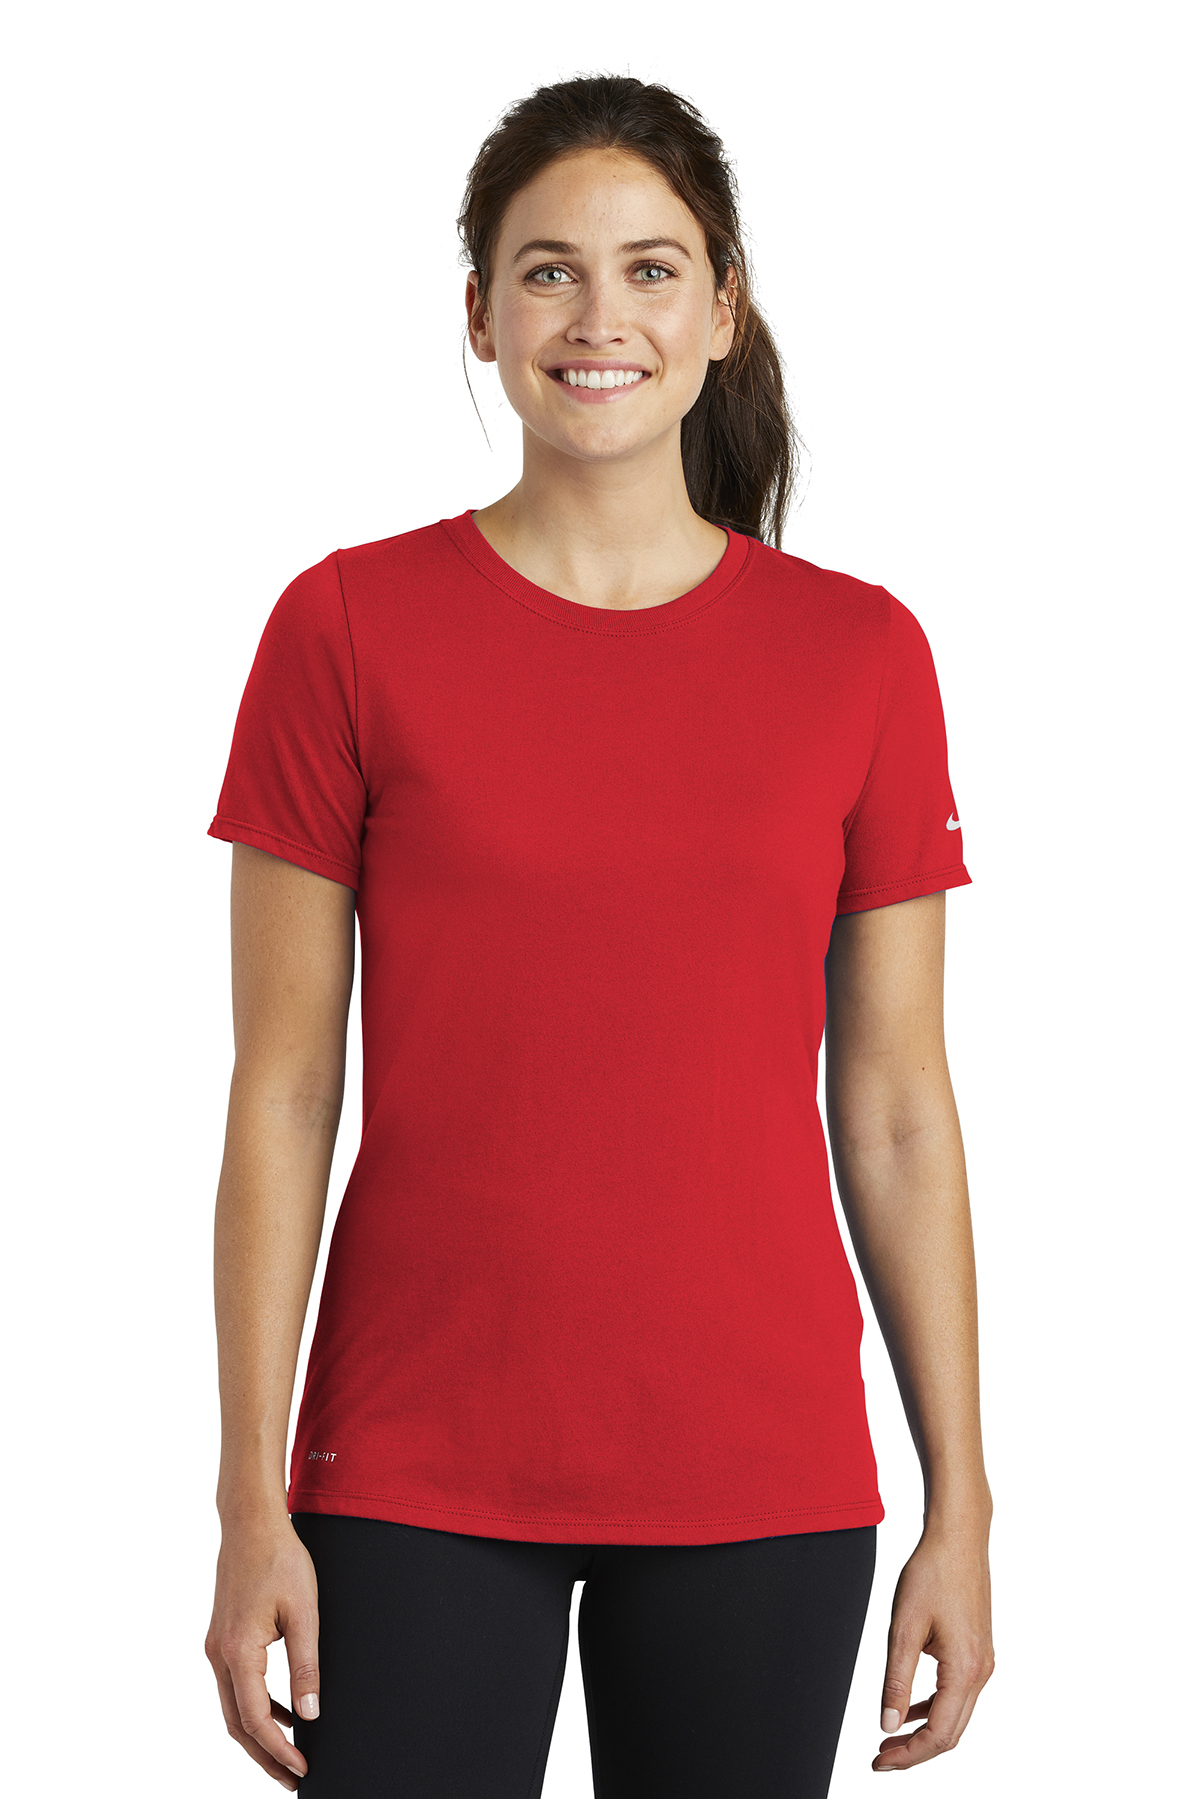 womens red dri fit shirt